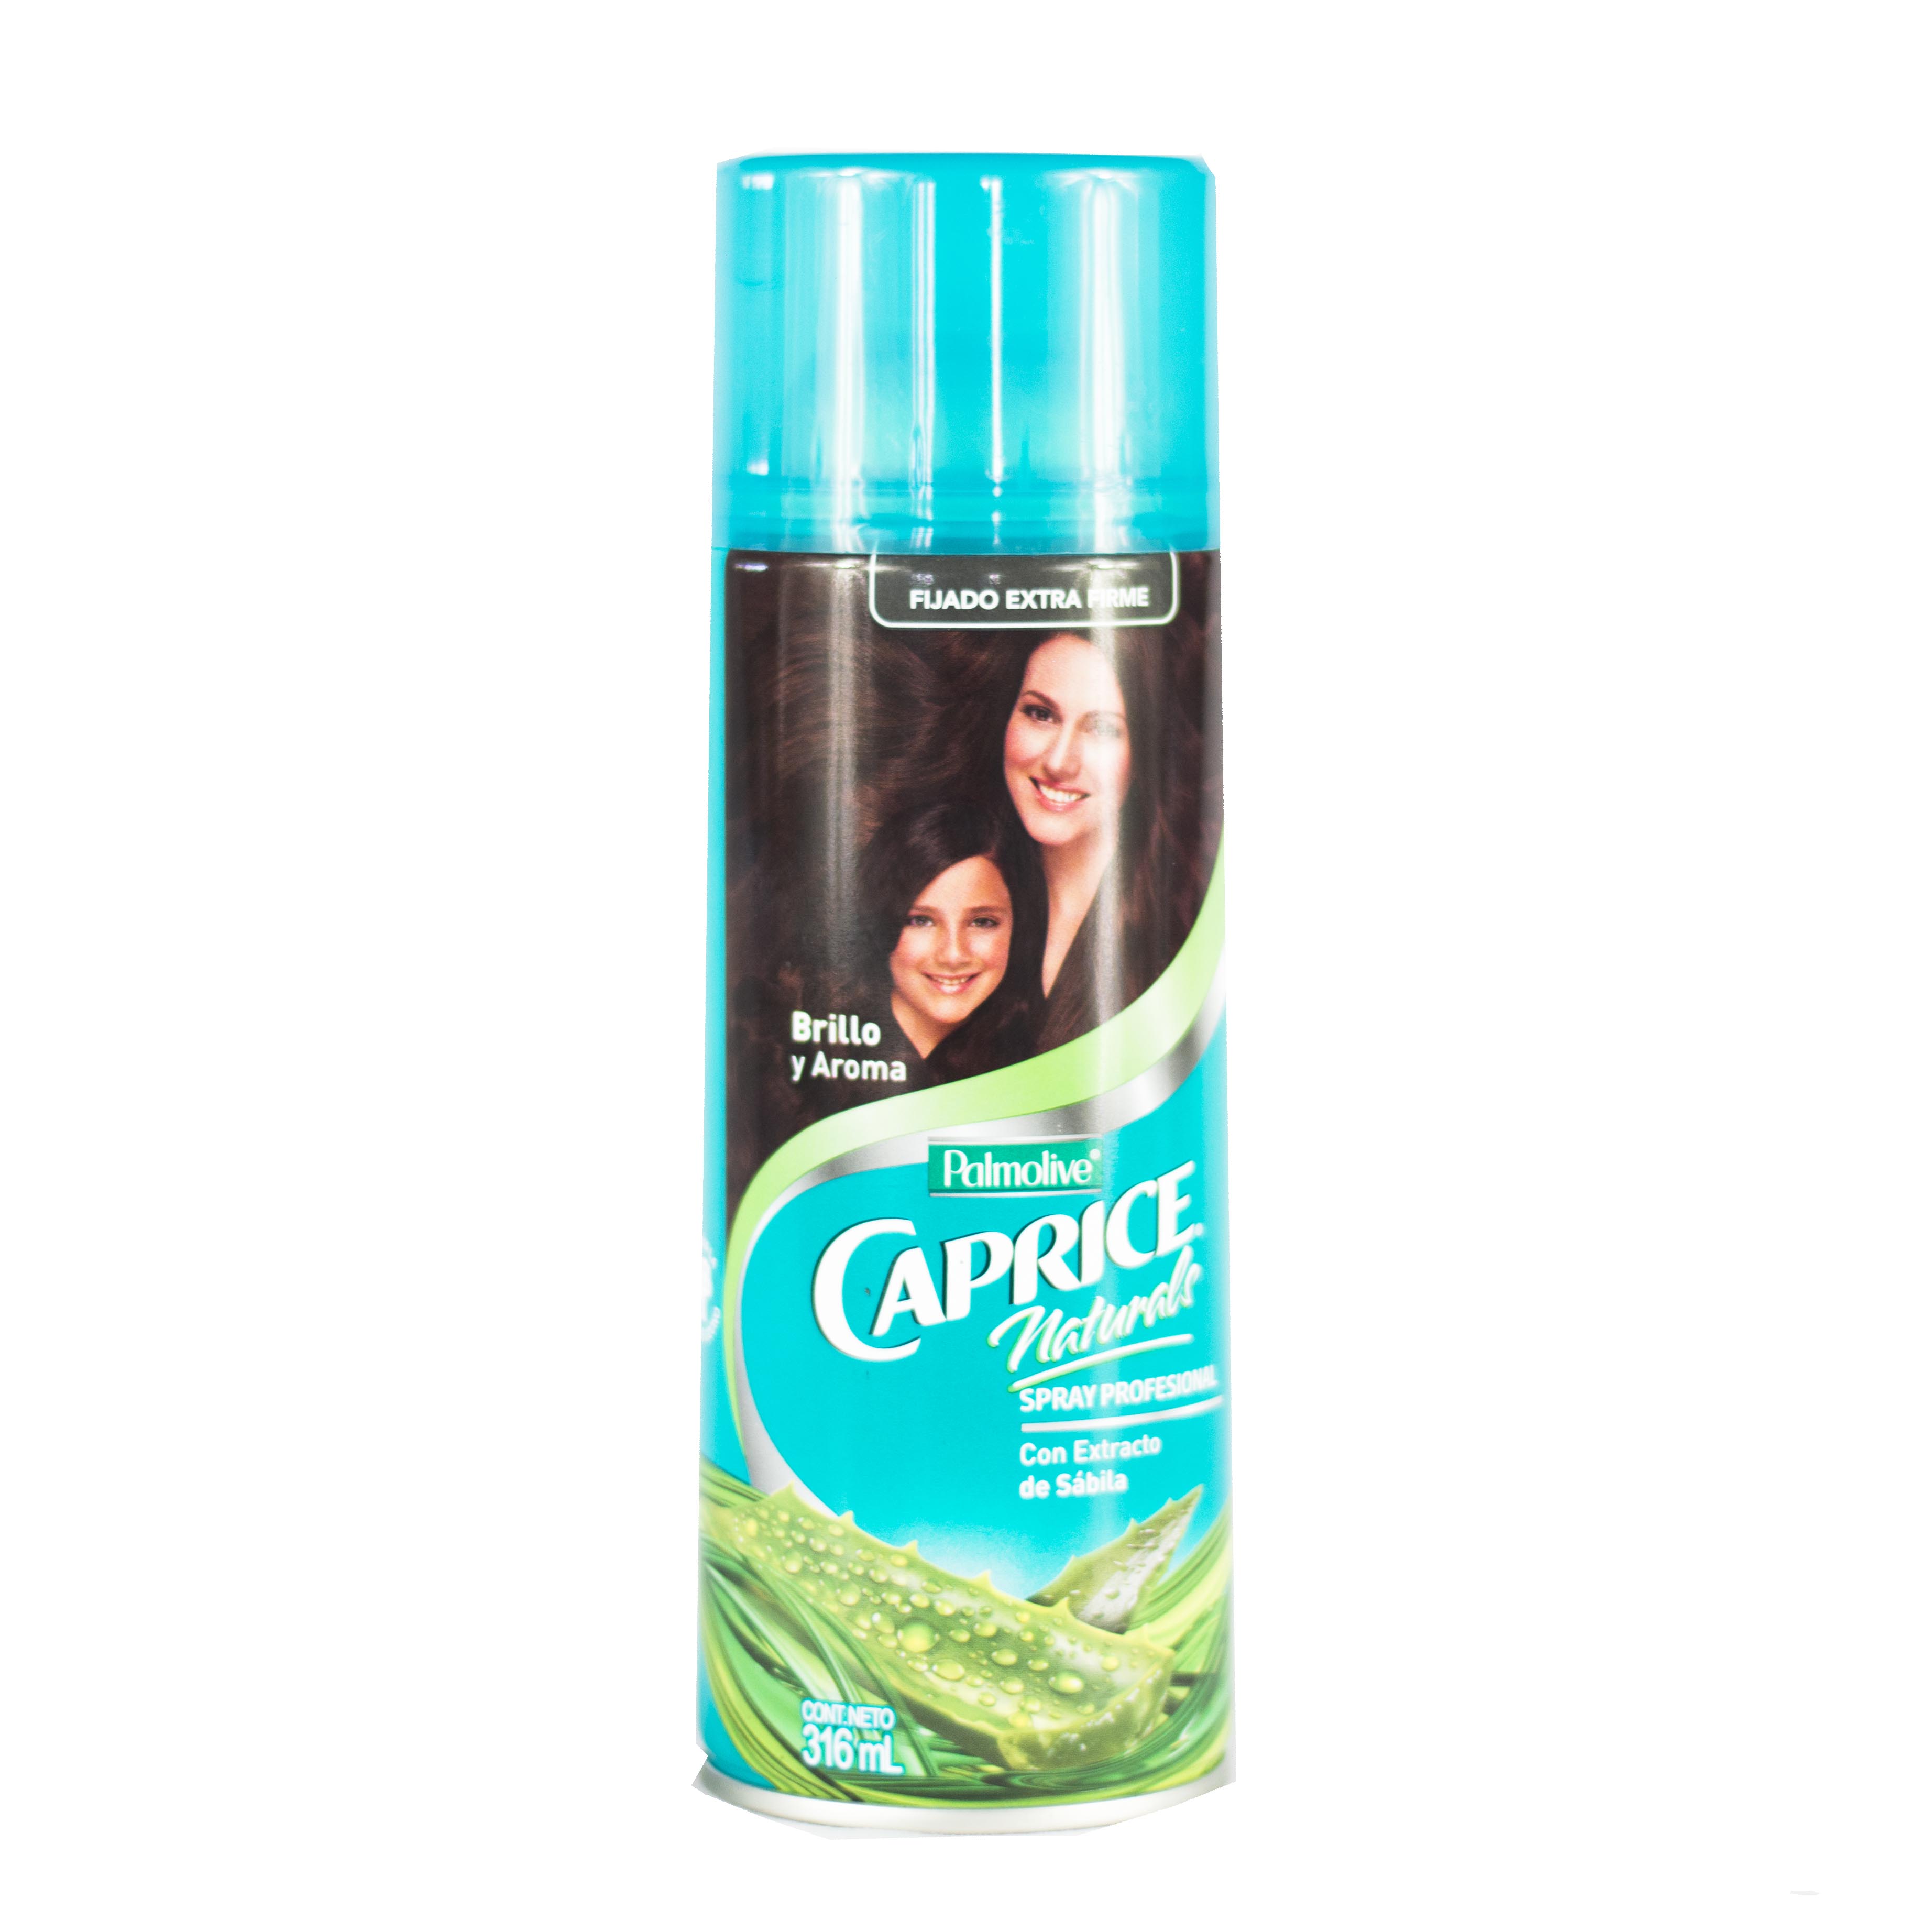 LAOS MX | Prodcut - Spray Caprice Naturals Spray Profesional Palmolive 316  ml.